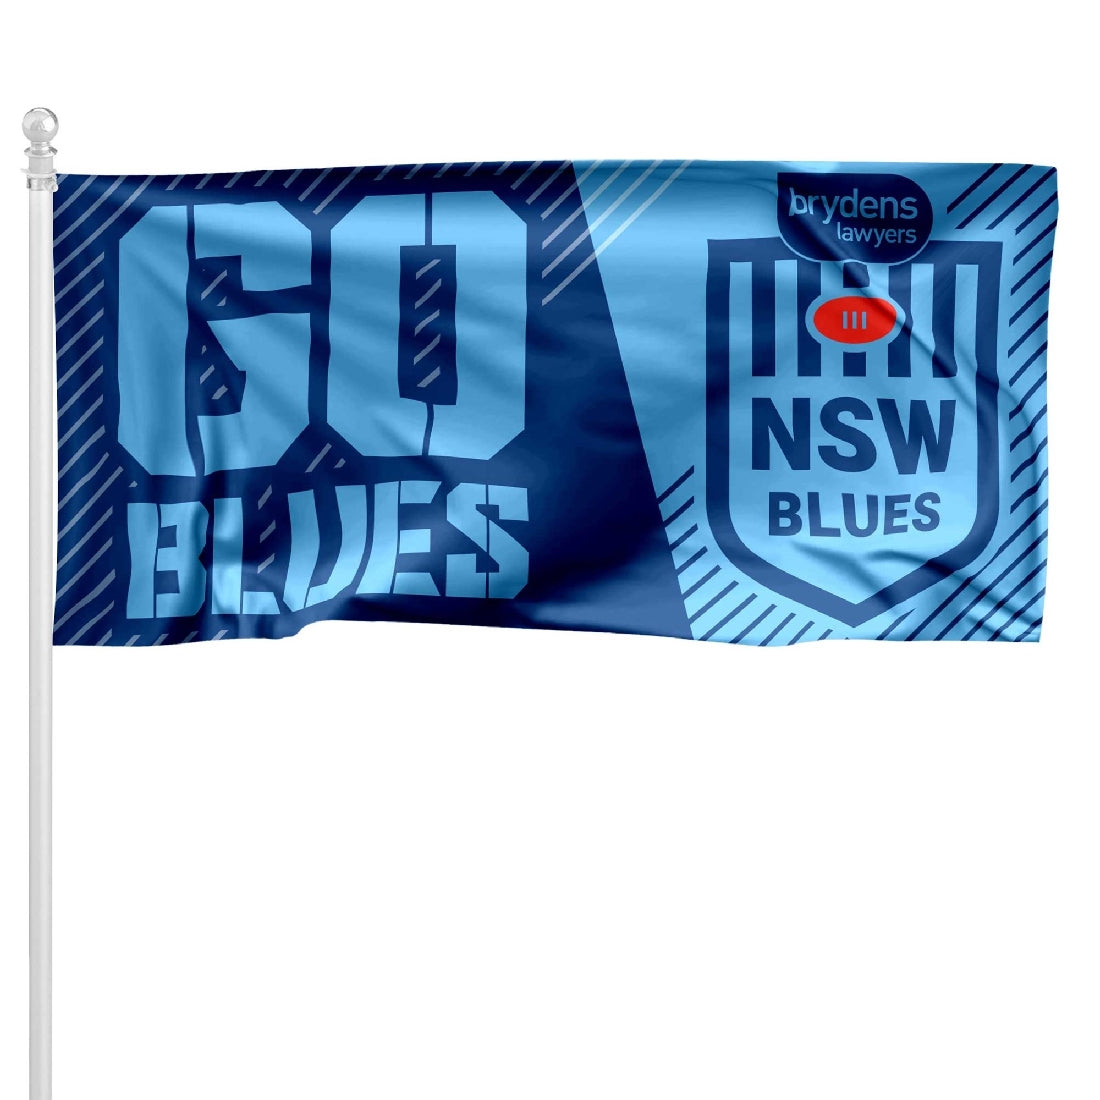 NSW Blues Pole Flag